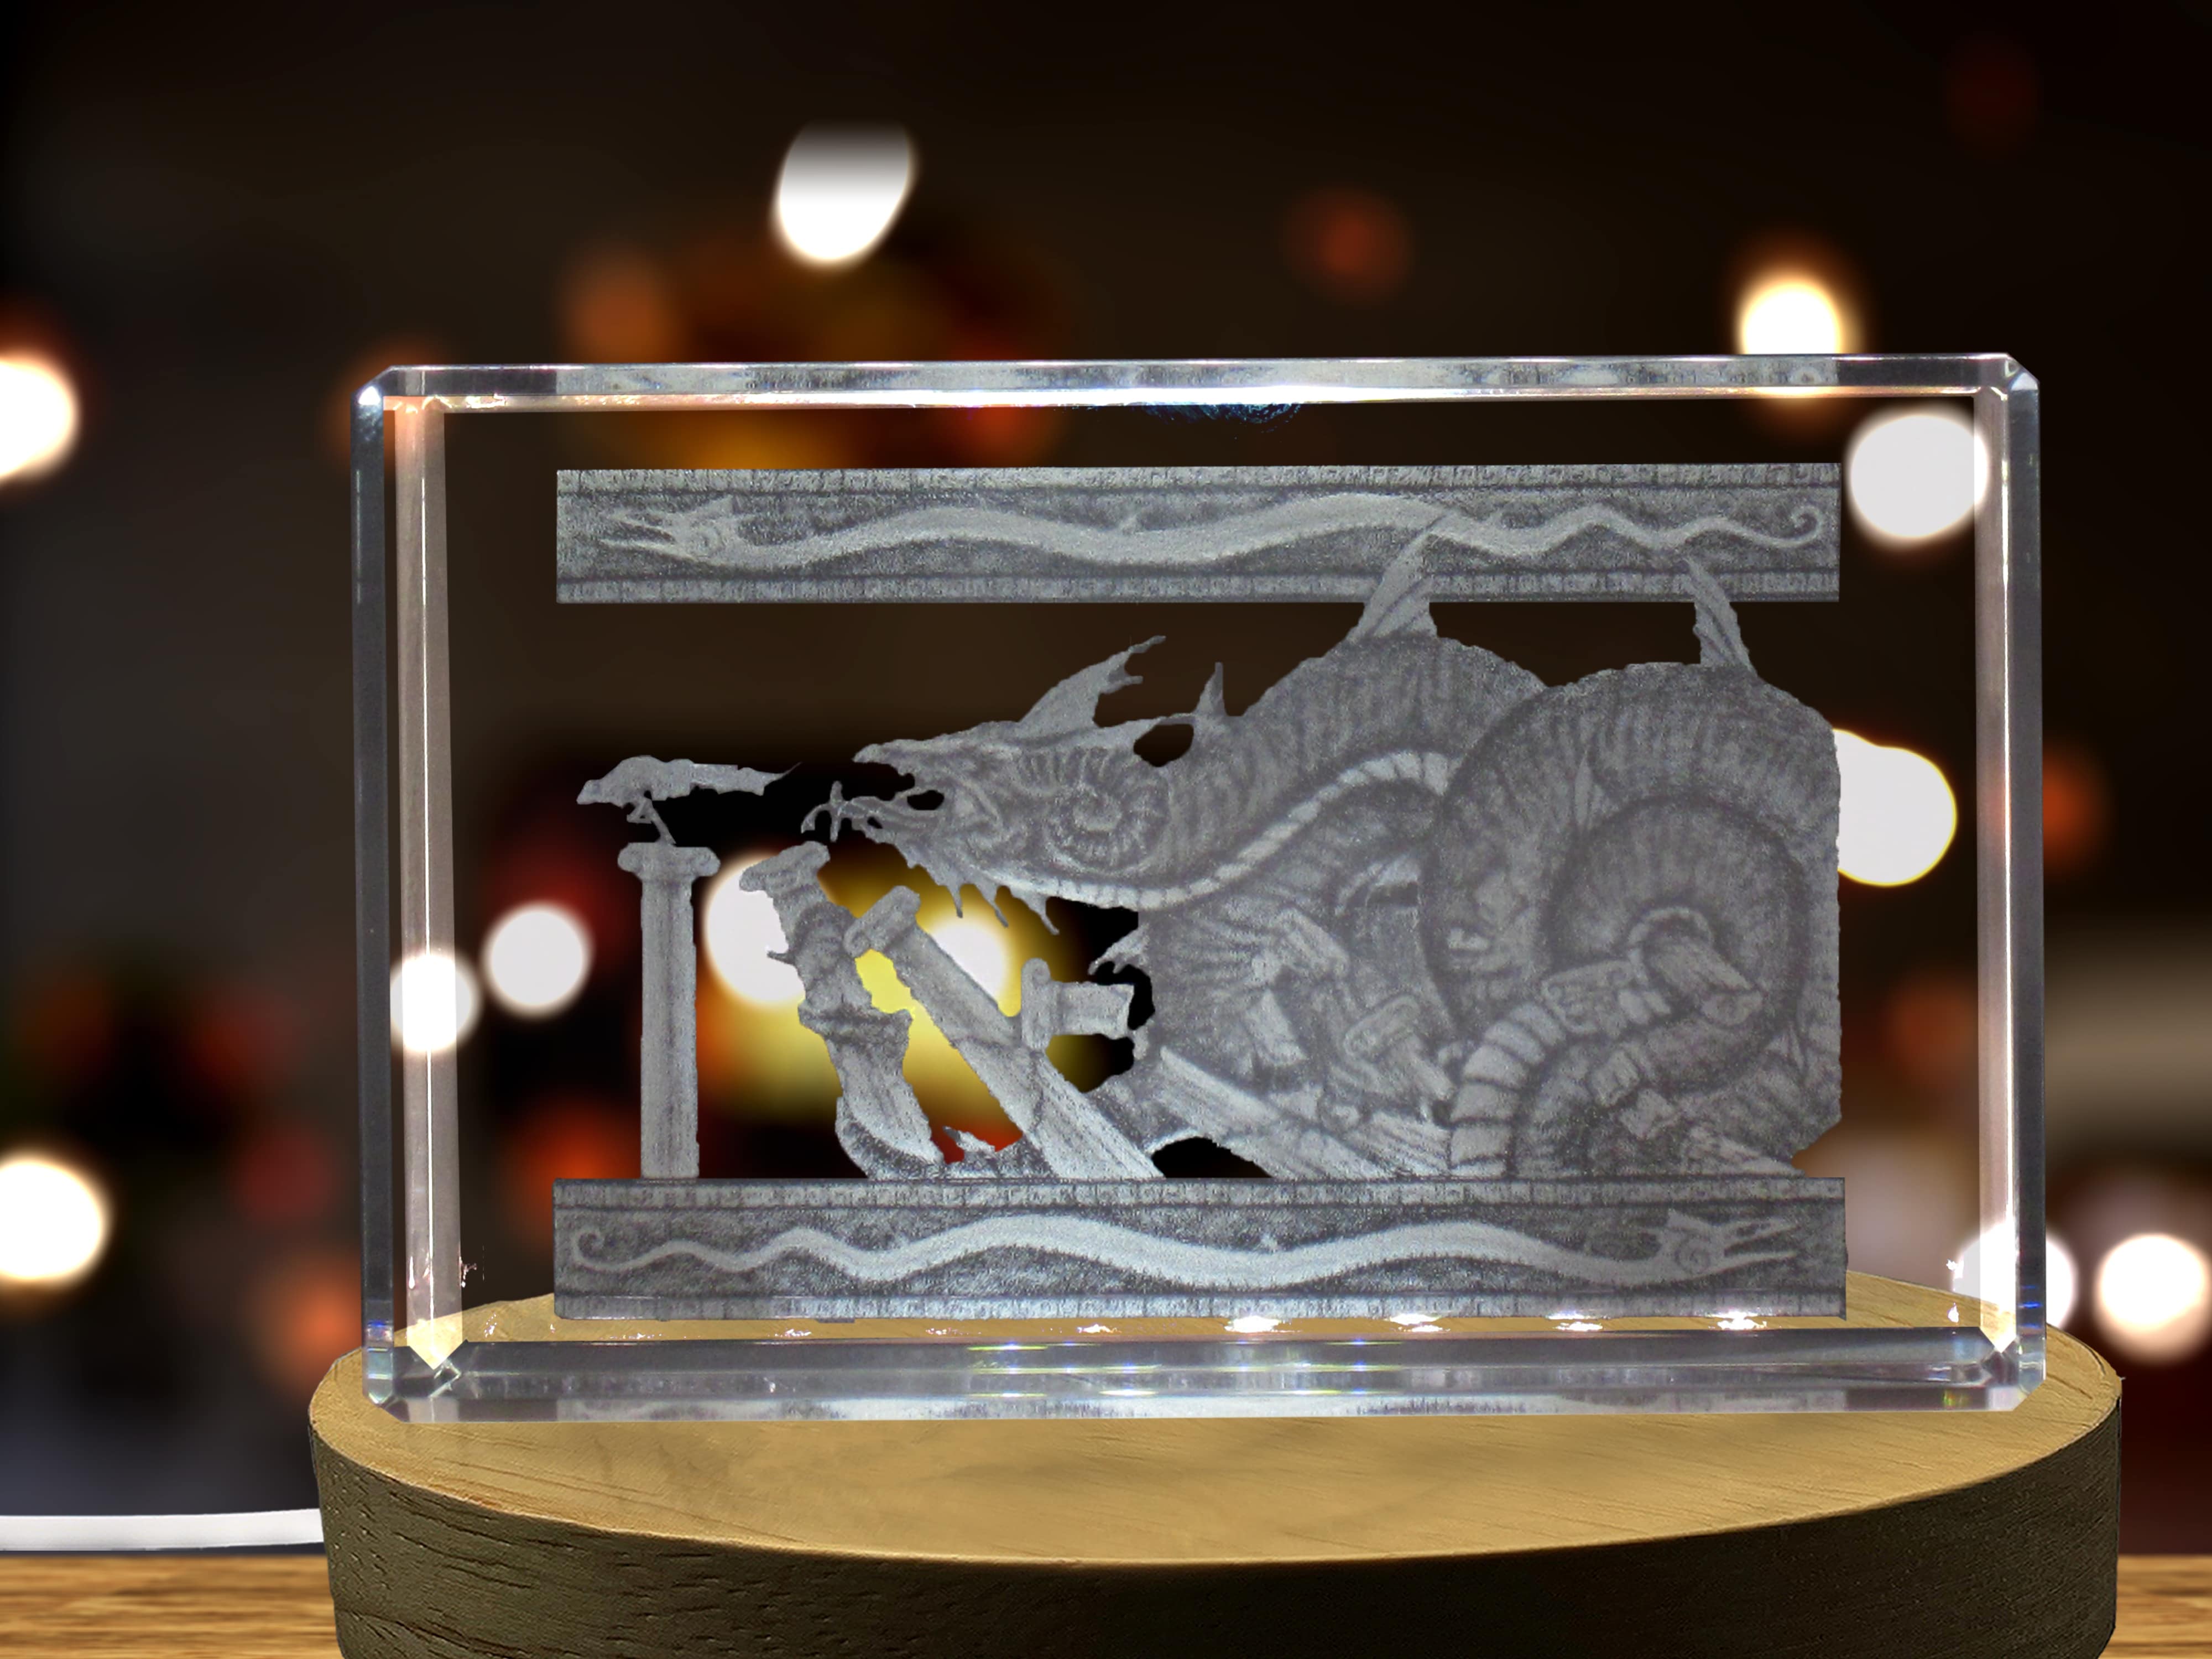 Colchian Dragon 3D Engraved Crystal | 3D Engraved Crystal Keepsake A&B Crystal Collection